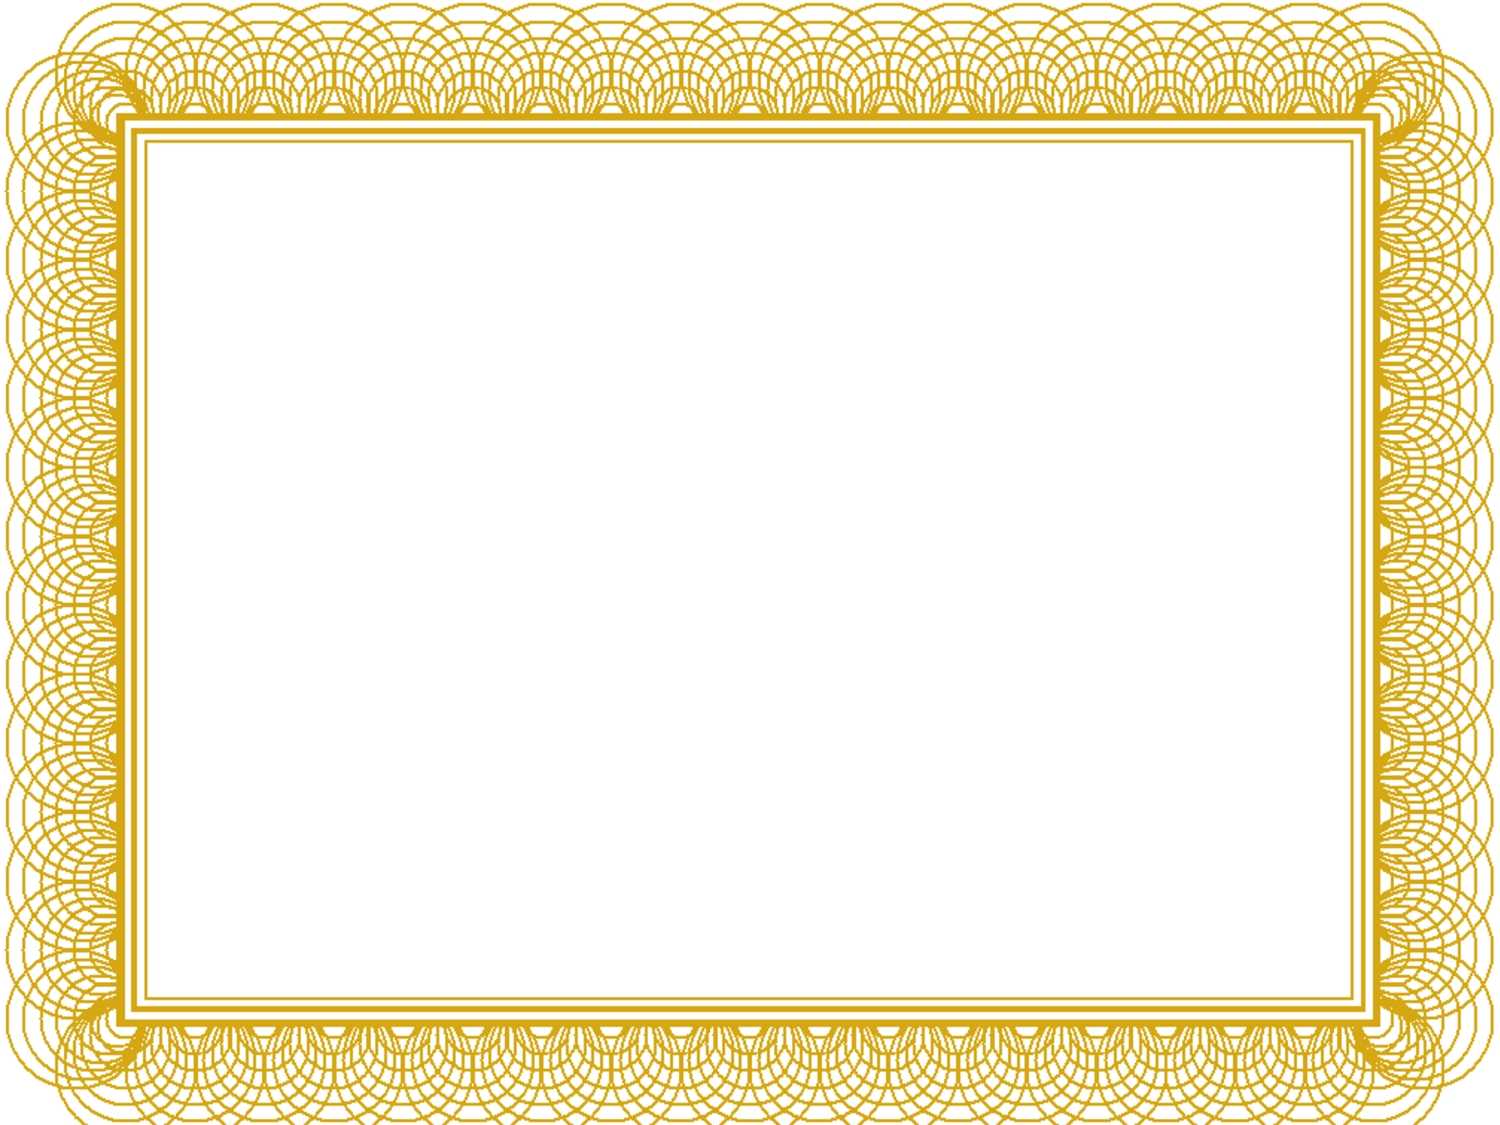 Award Certificate Border Template Pertaining To Gold Throughout Award Certificate Border Template